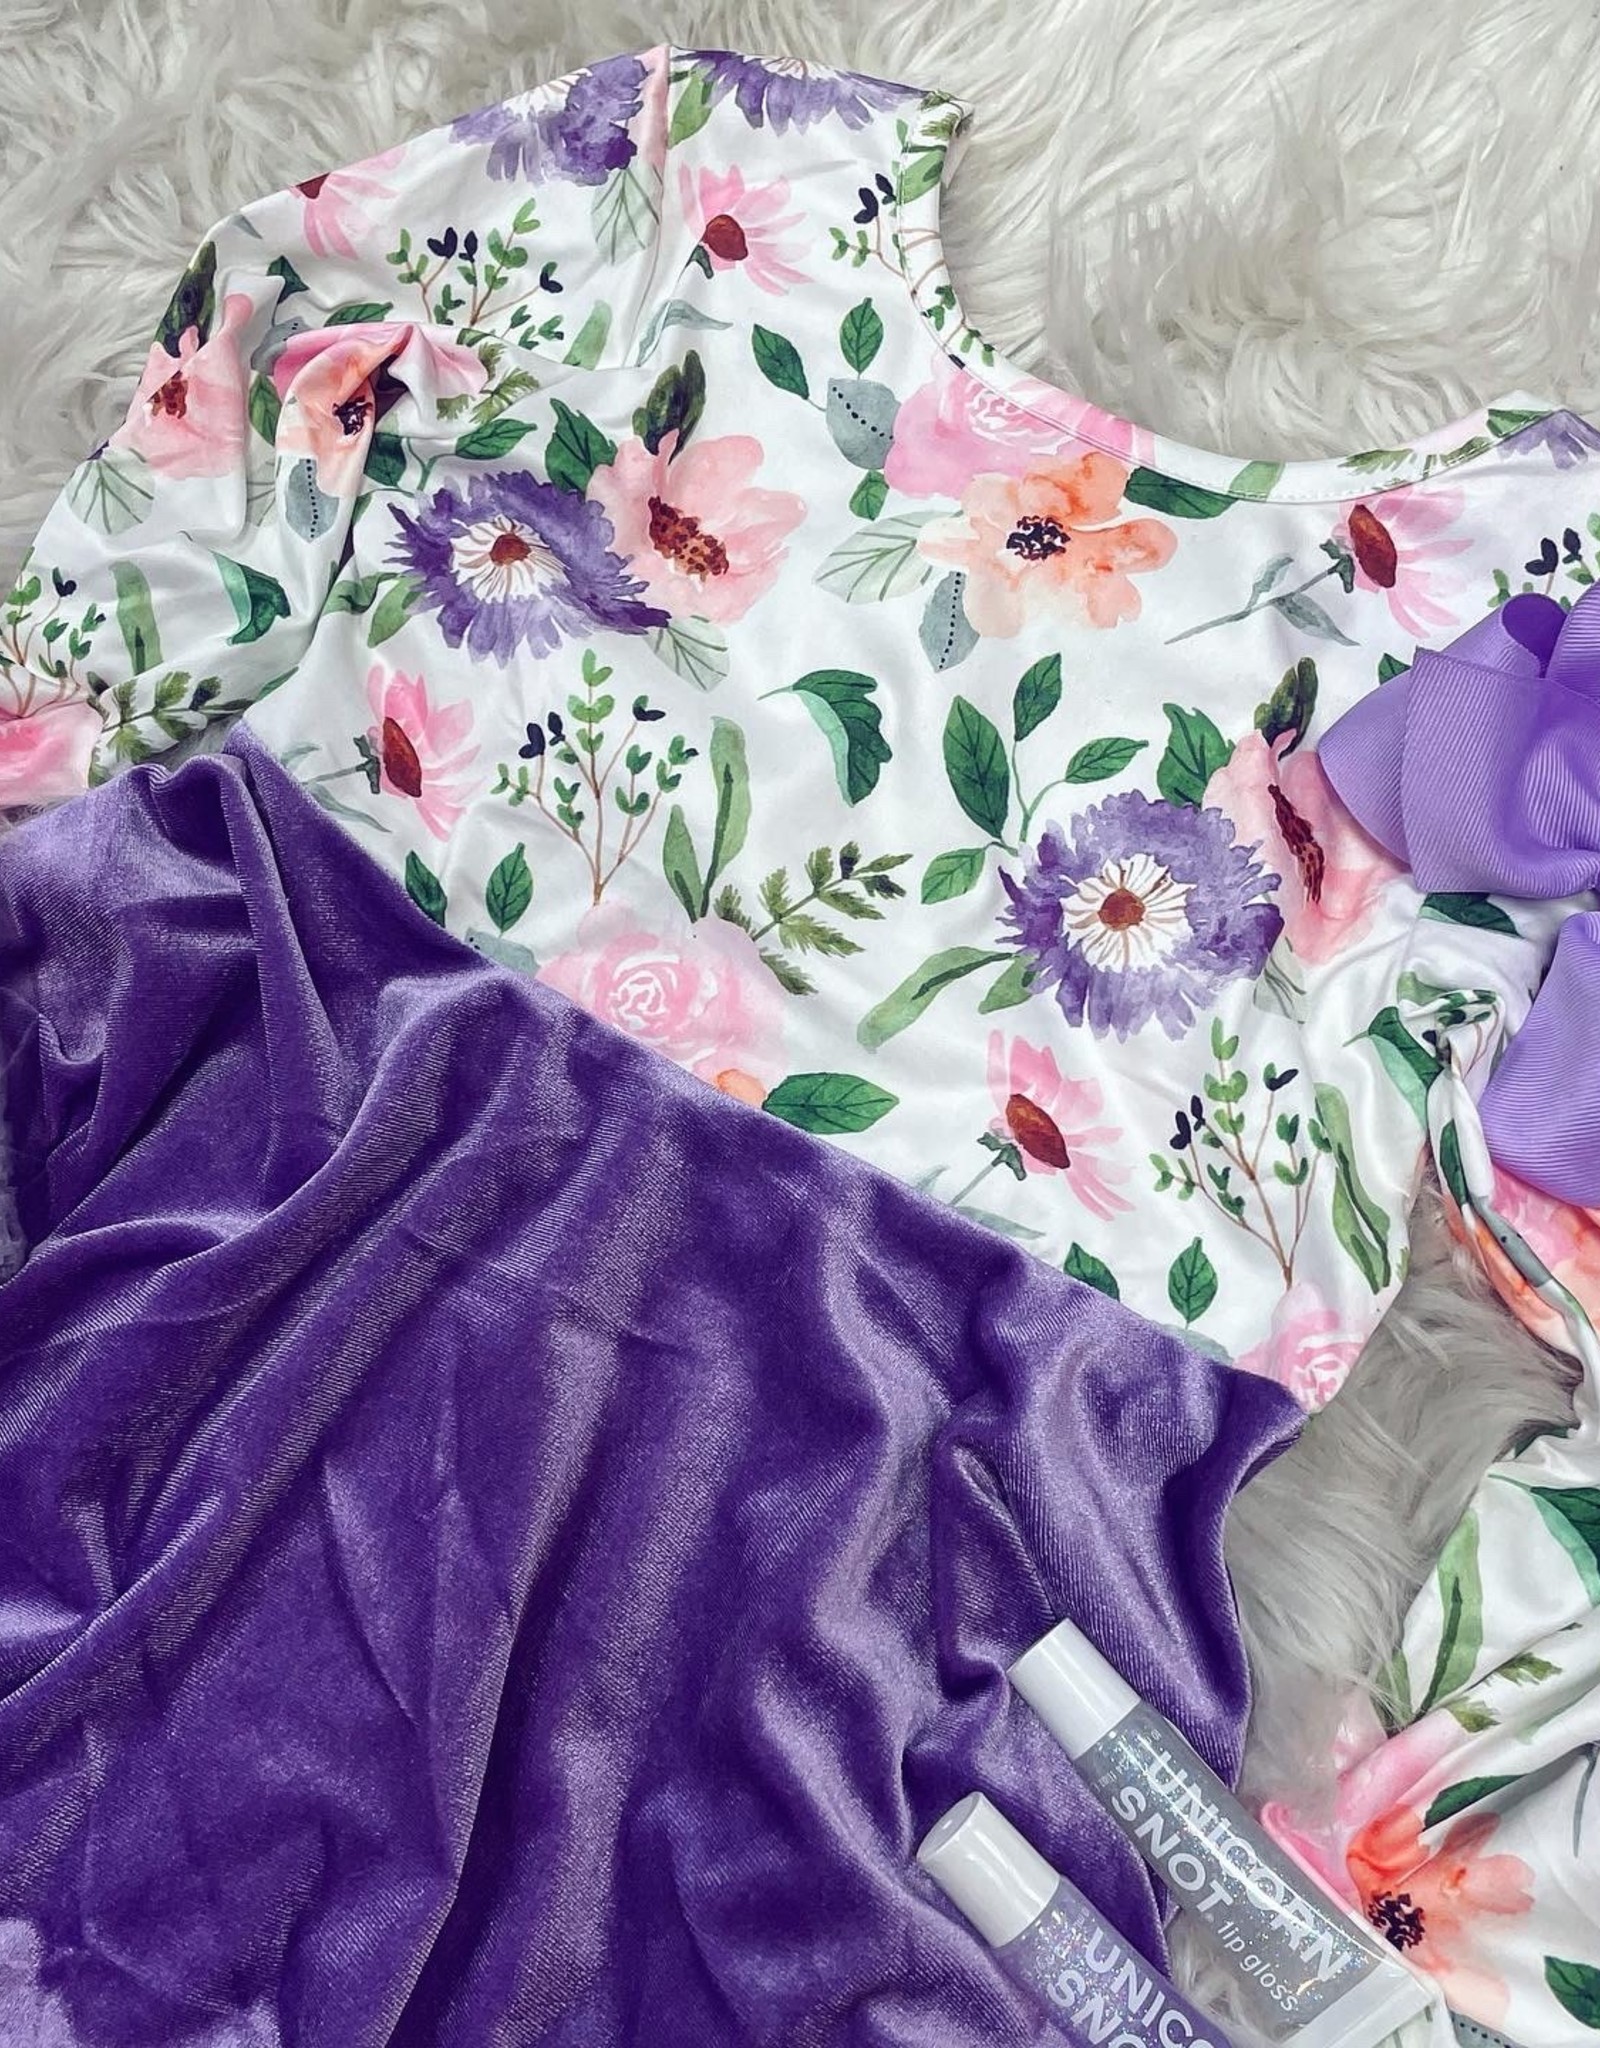 Honeydew Hannah Dress in Purple Floral